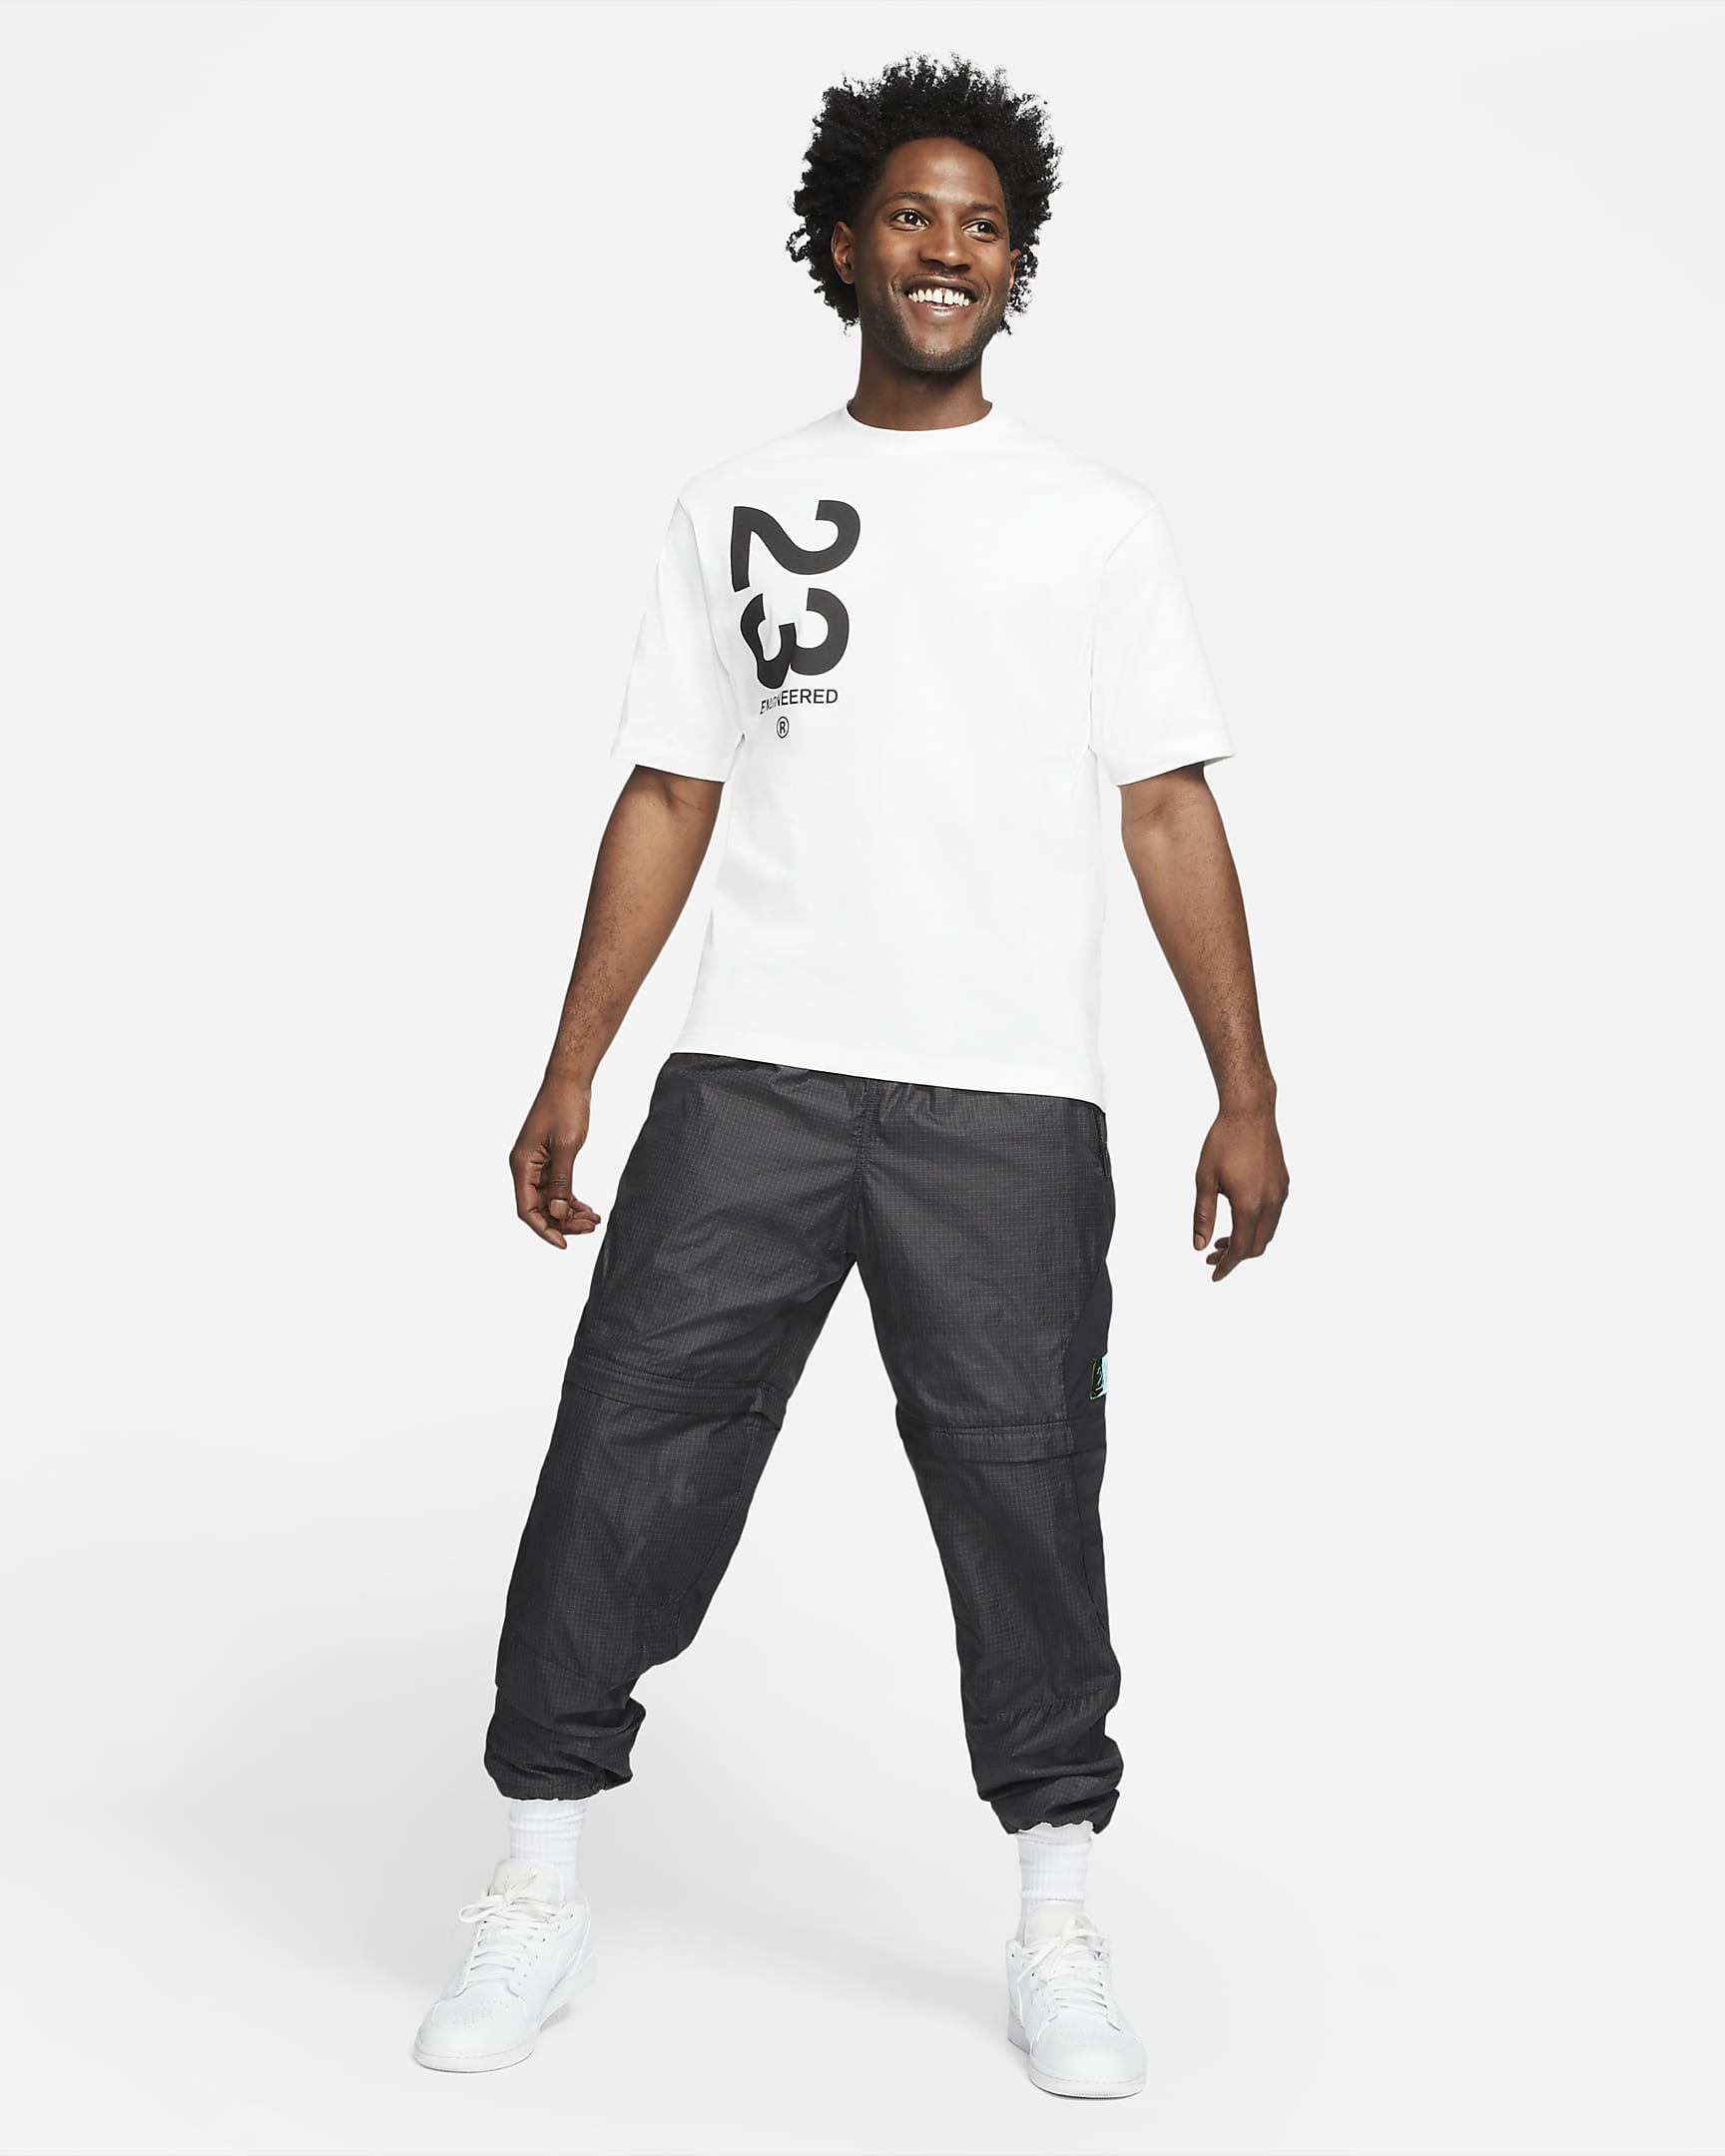 Jordan 23 Engineered Men's Short-Sleeve T-Shirt. Nike JP